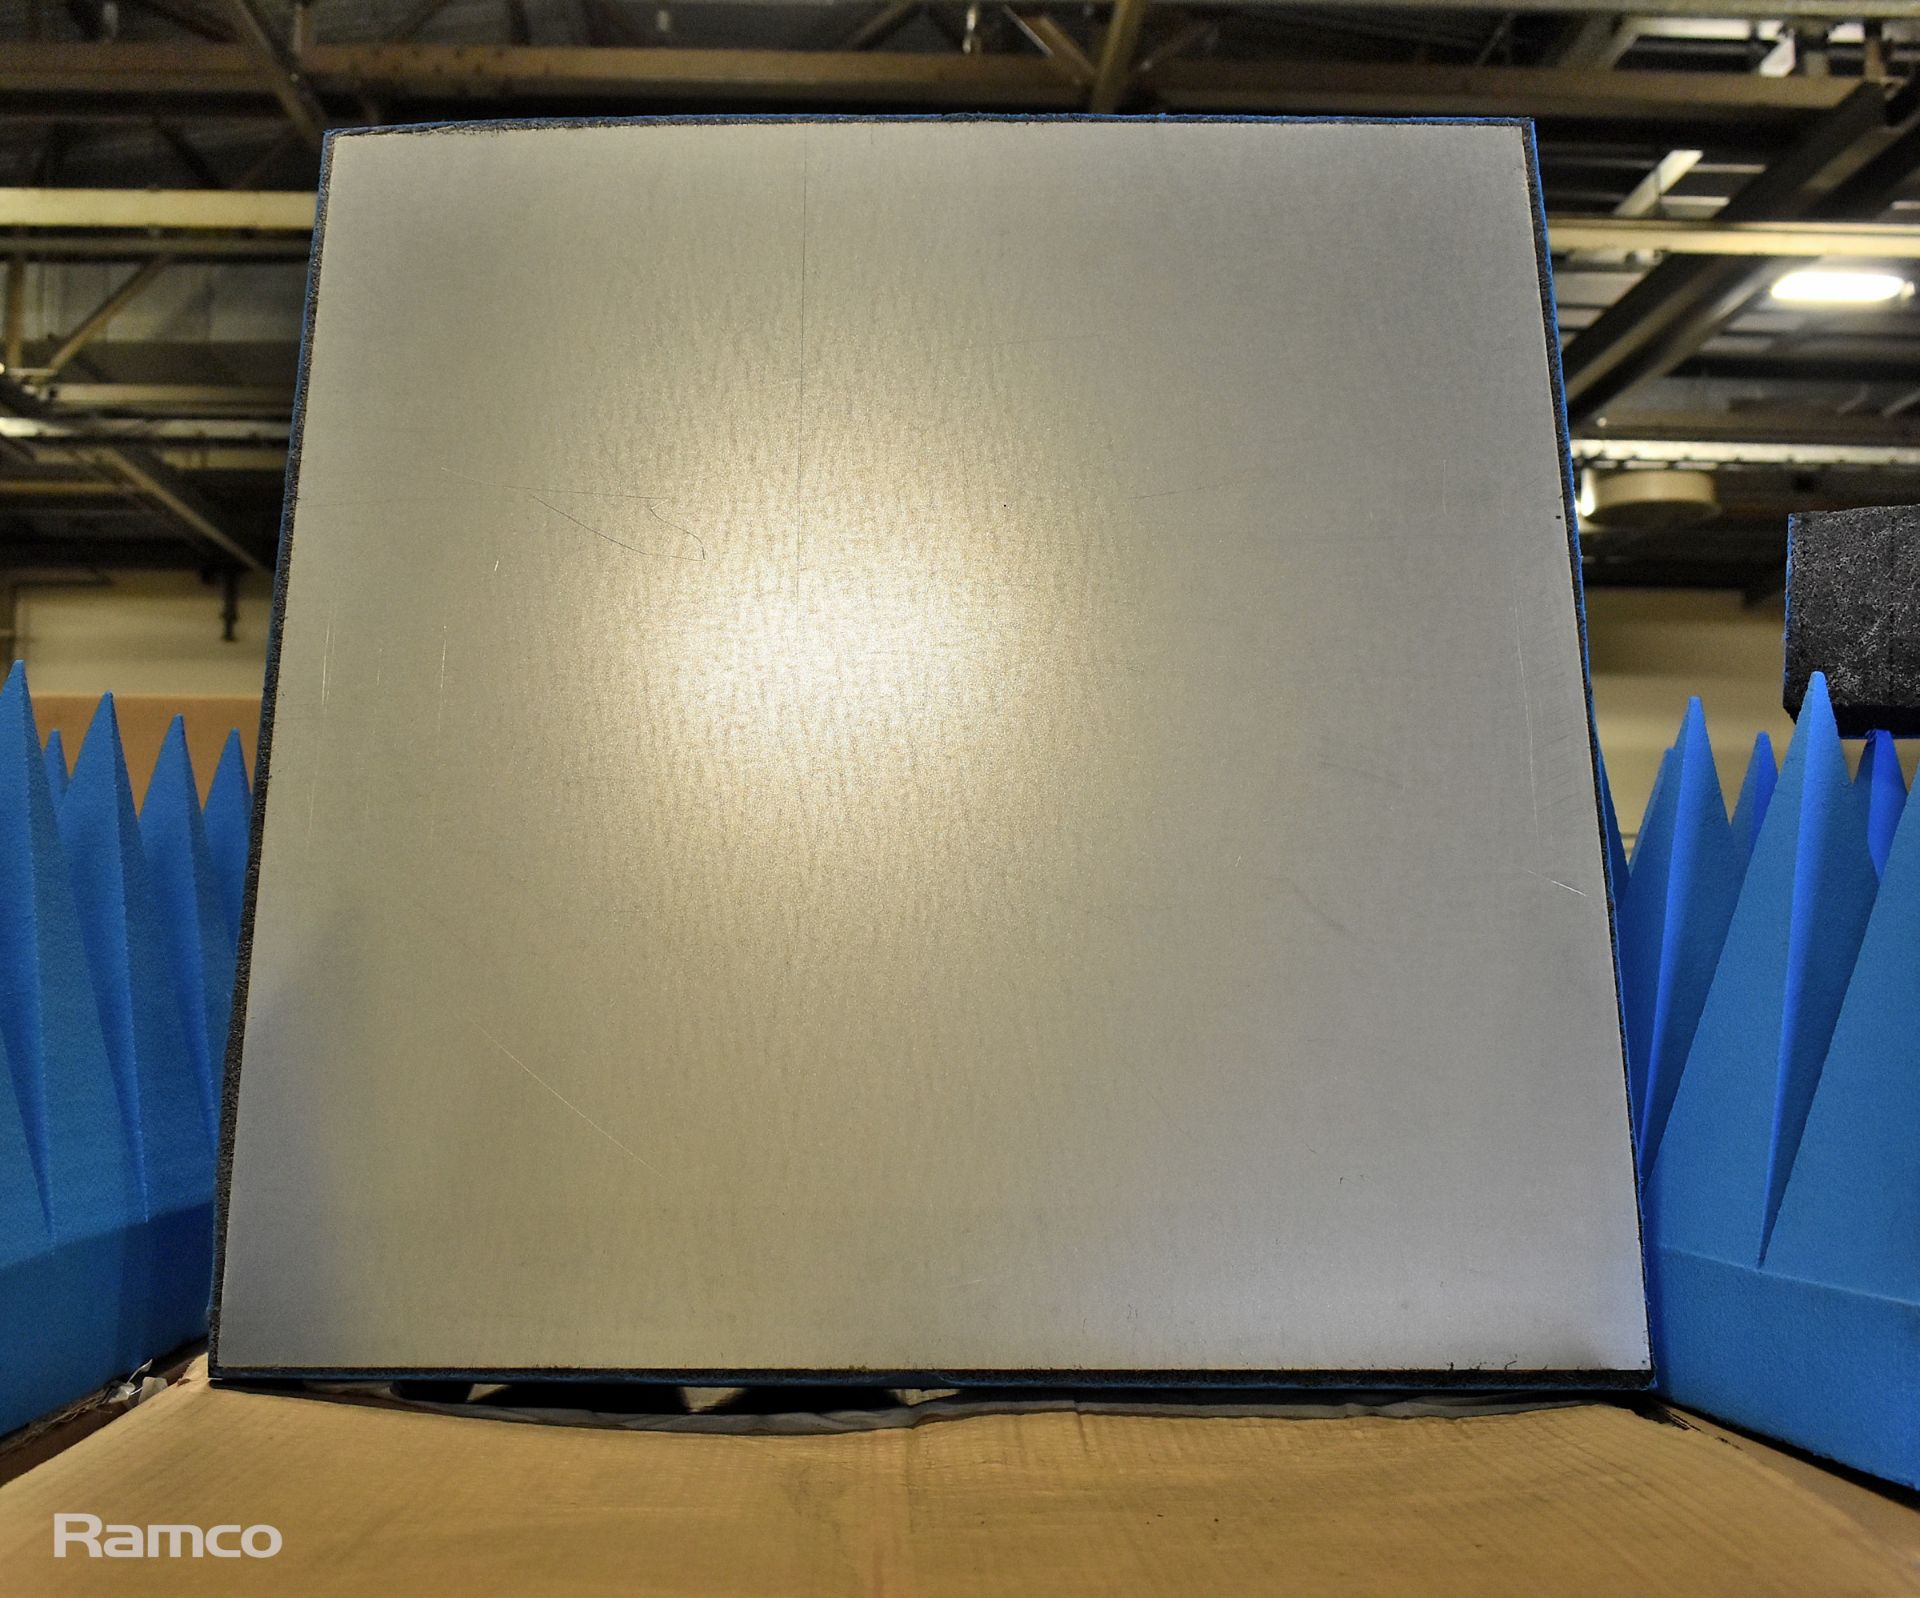 4x Sound reducing foam panels - L 60 x W 60 x H 30cm - Image 3 of 3